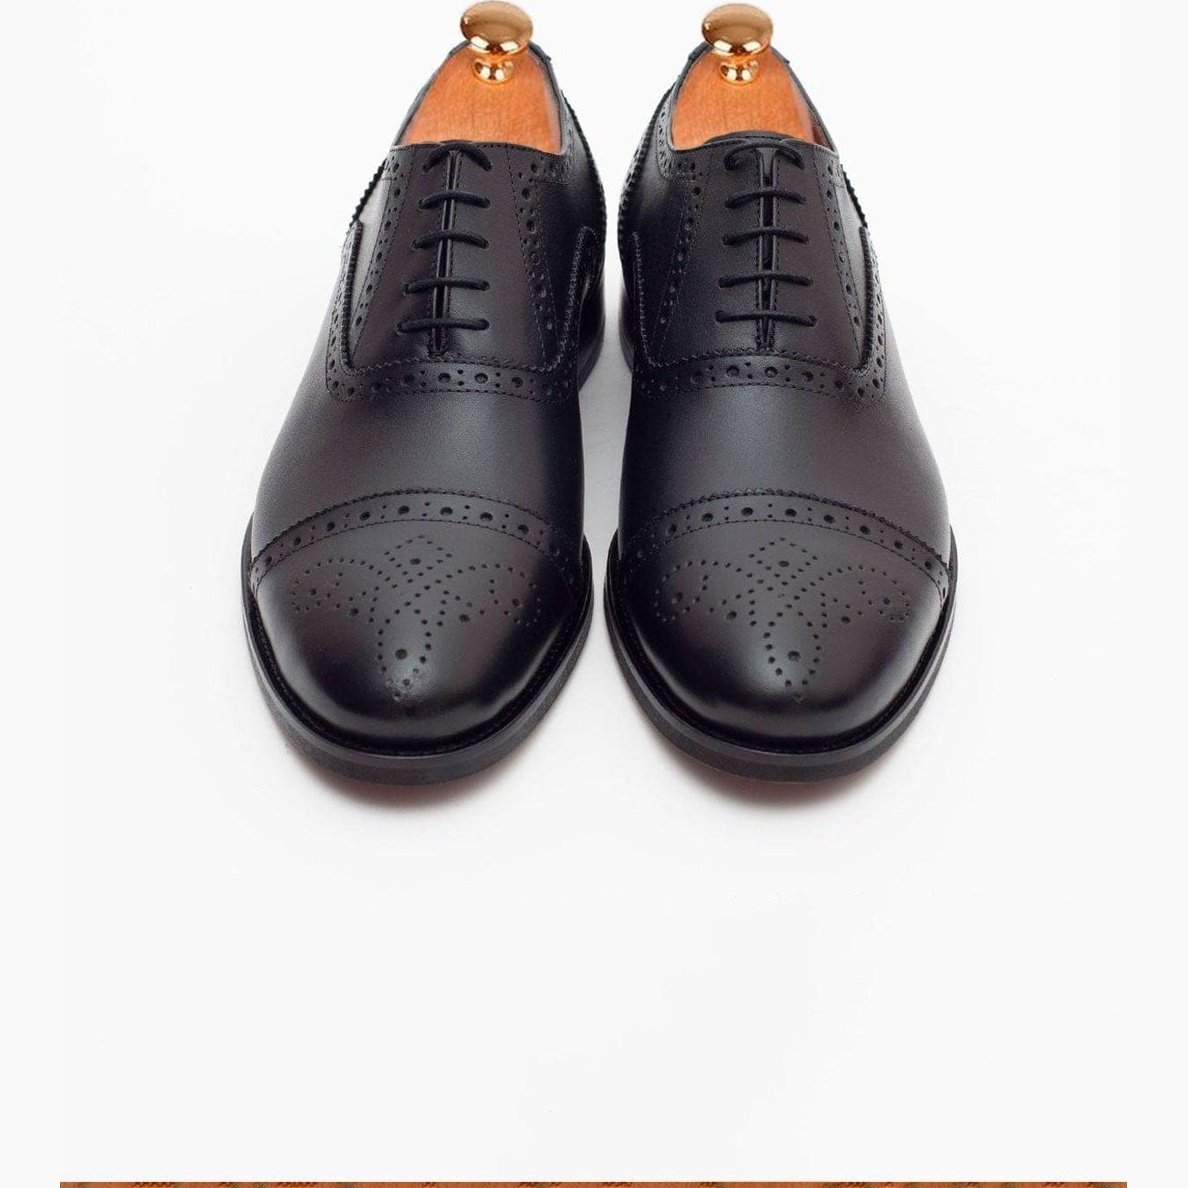 Ariston SHOES Ariston Mens Black Lace-up Oxford Leather Dress Shoes